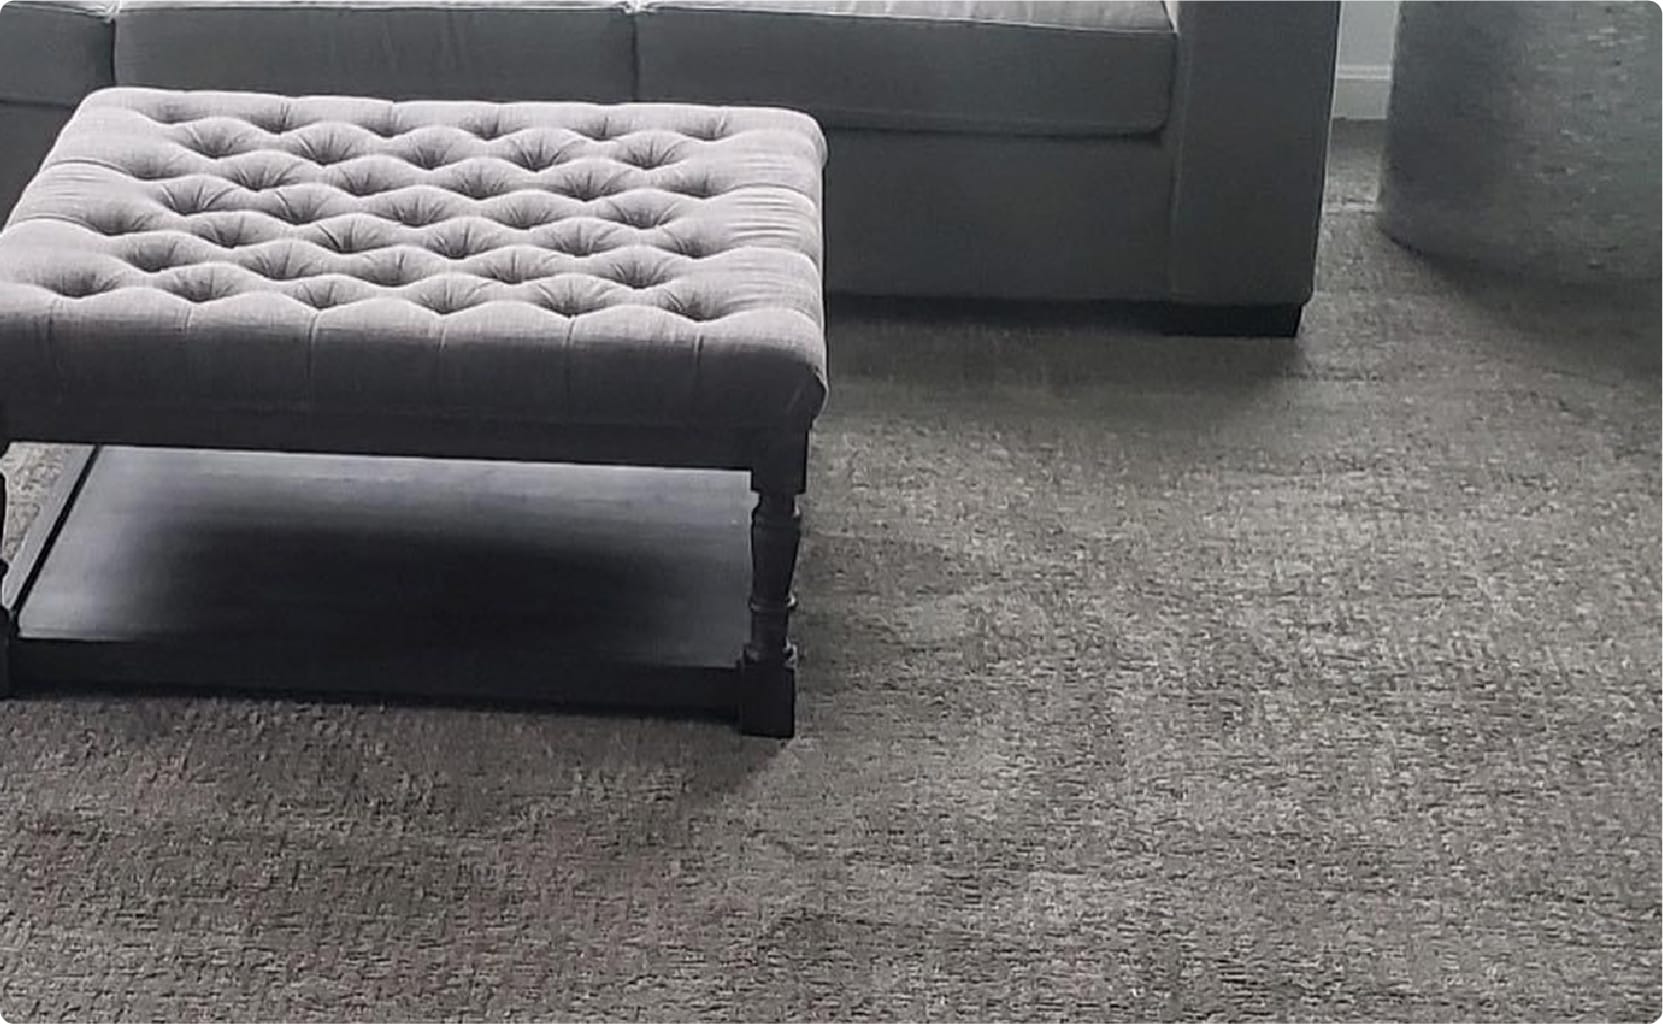 Grey carpet in a comfy grey living room